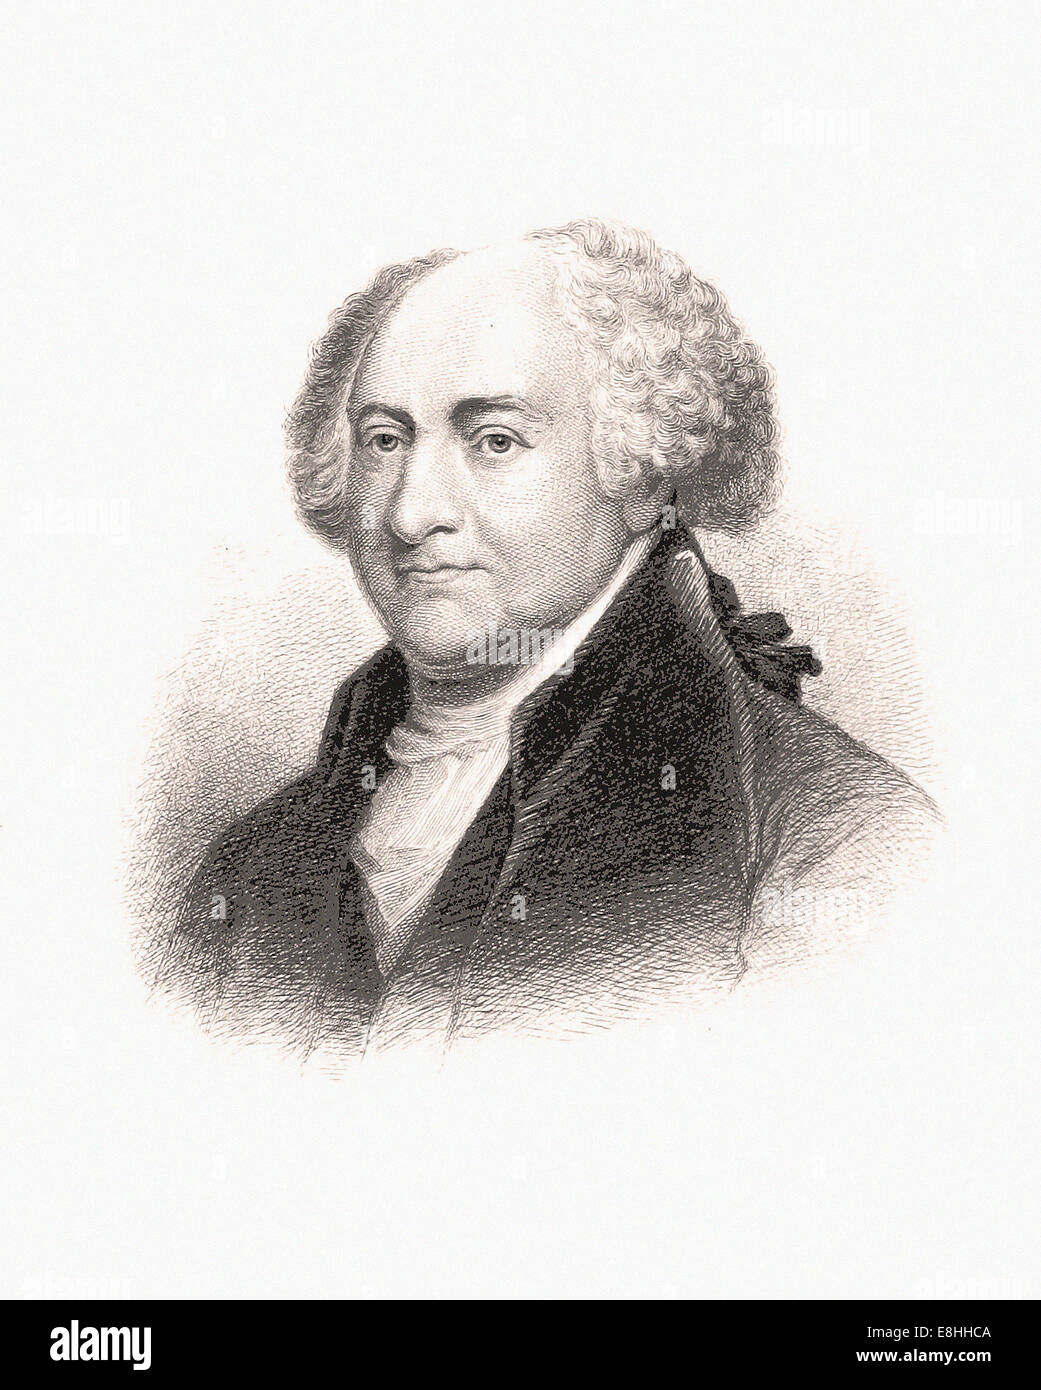 Portrait of John Adams - Engraving - XIX th Century Stock Photo